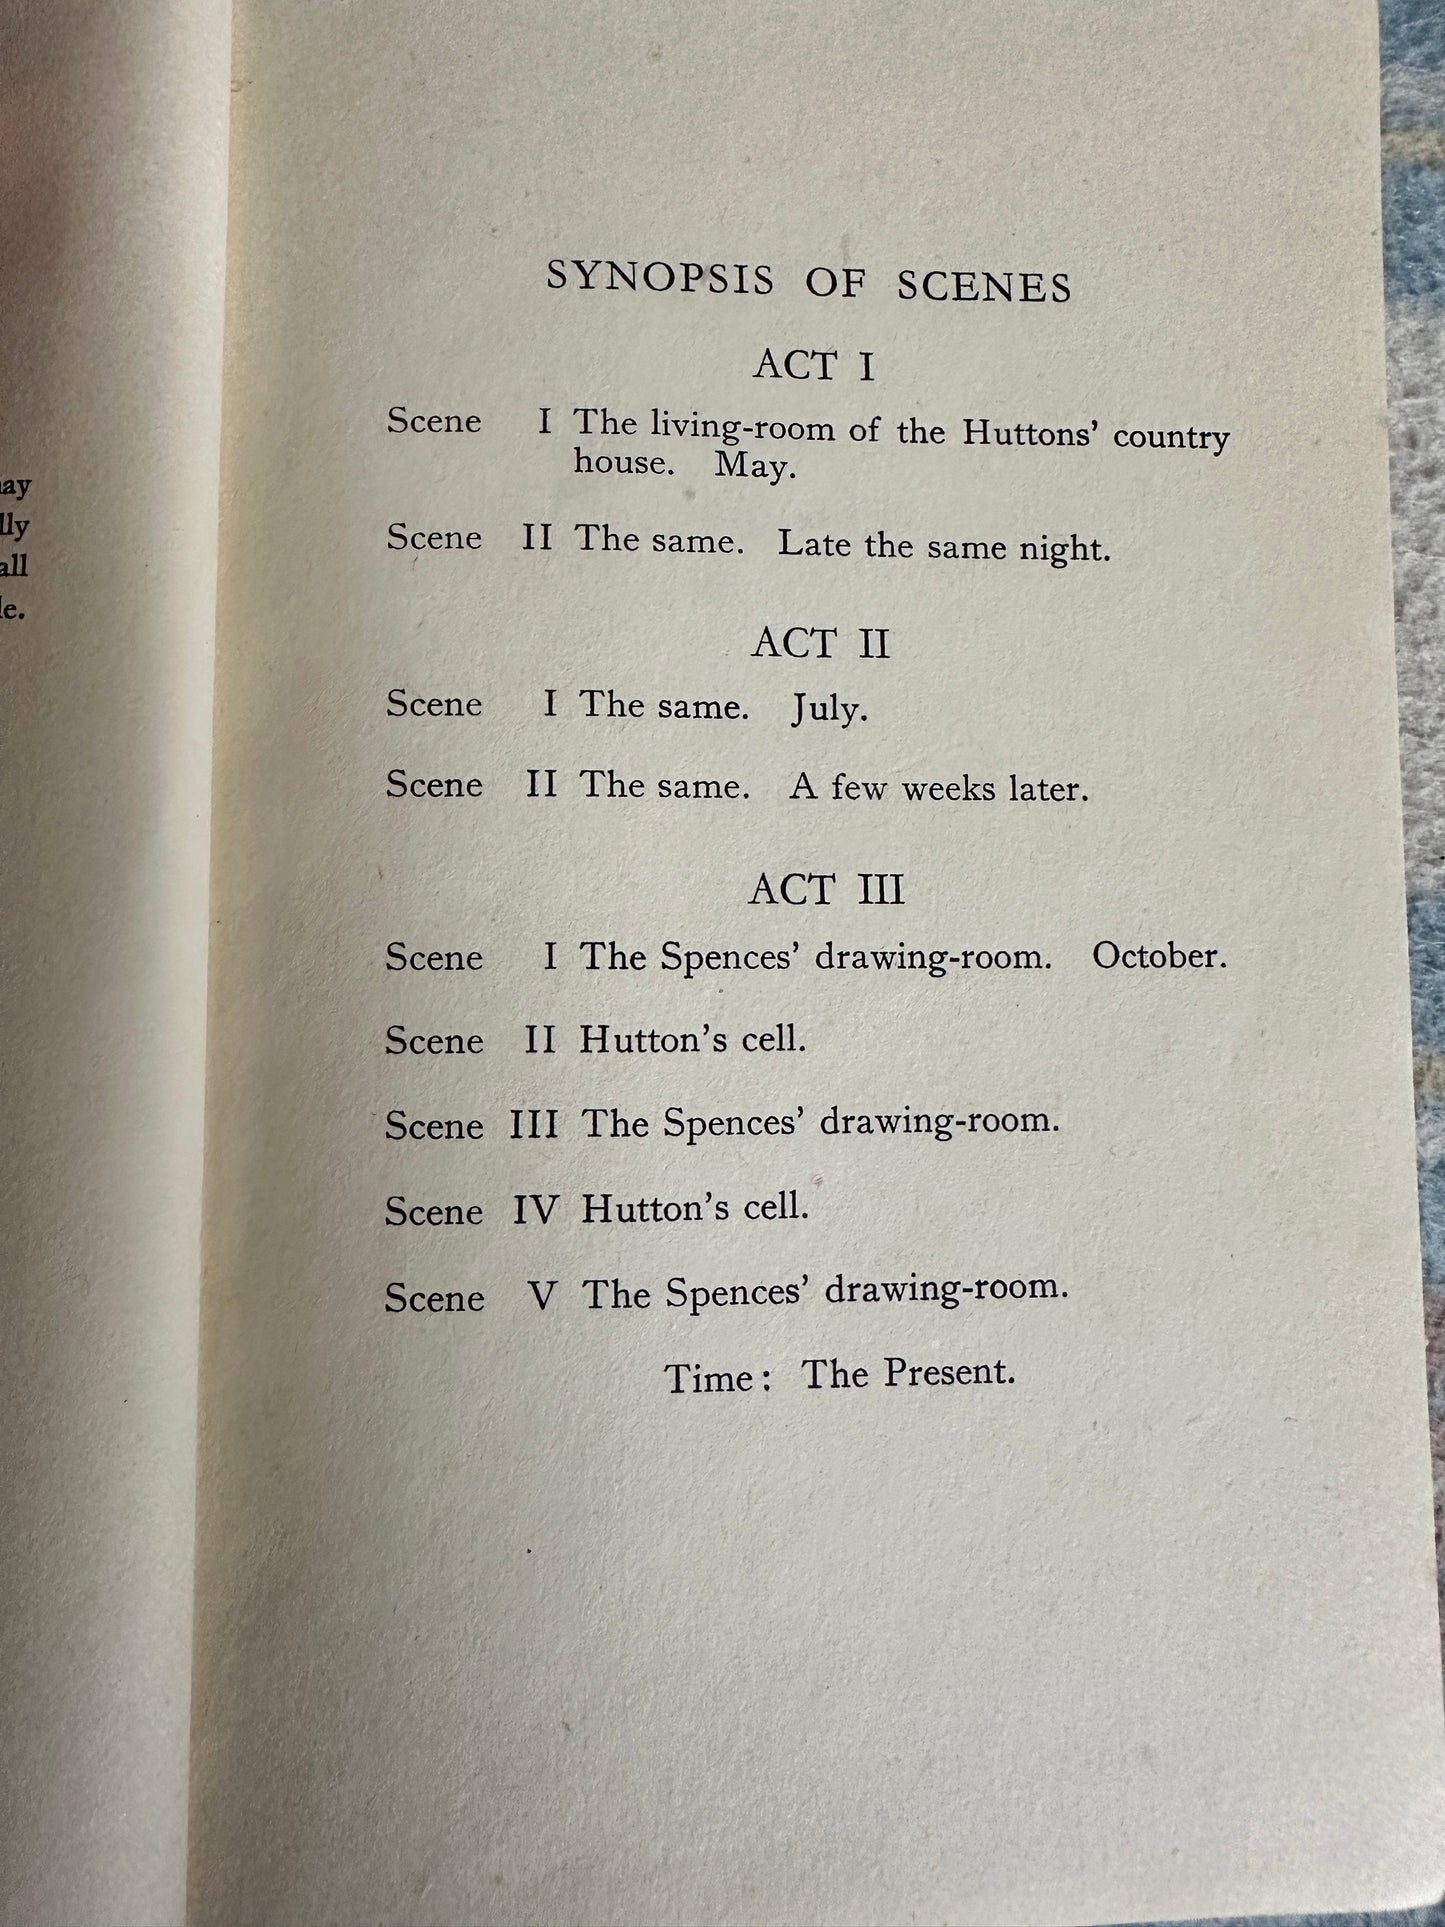 1948*1st* The Gioconda Smile(A Play) - Aldous Huxley (Chatto & Windus)